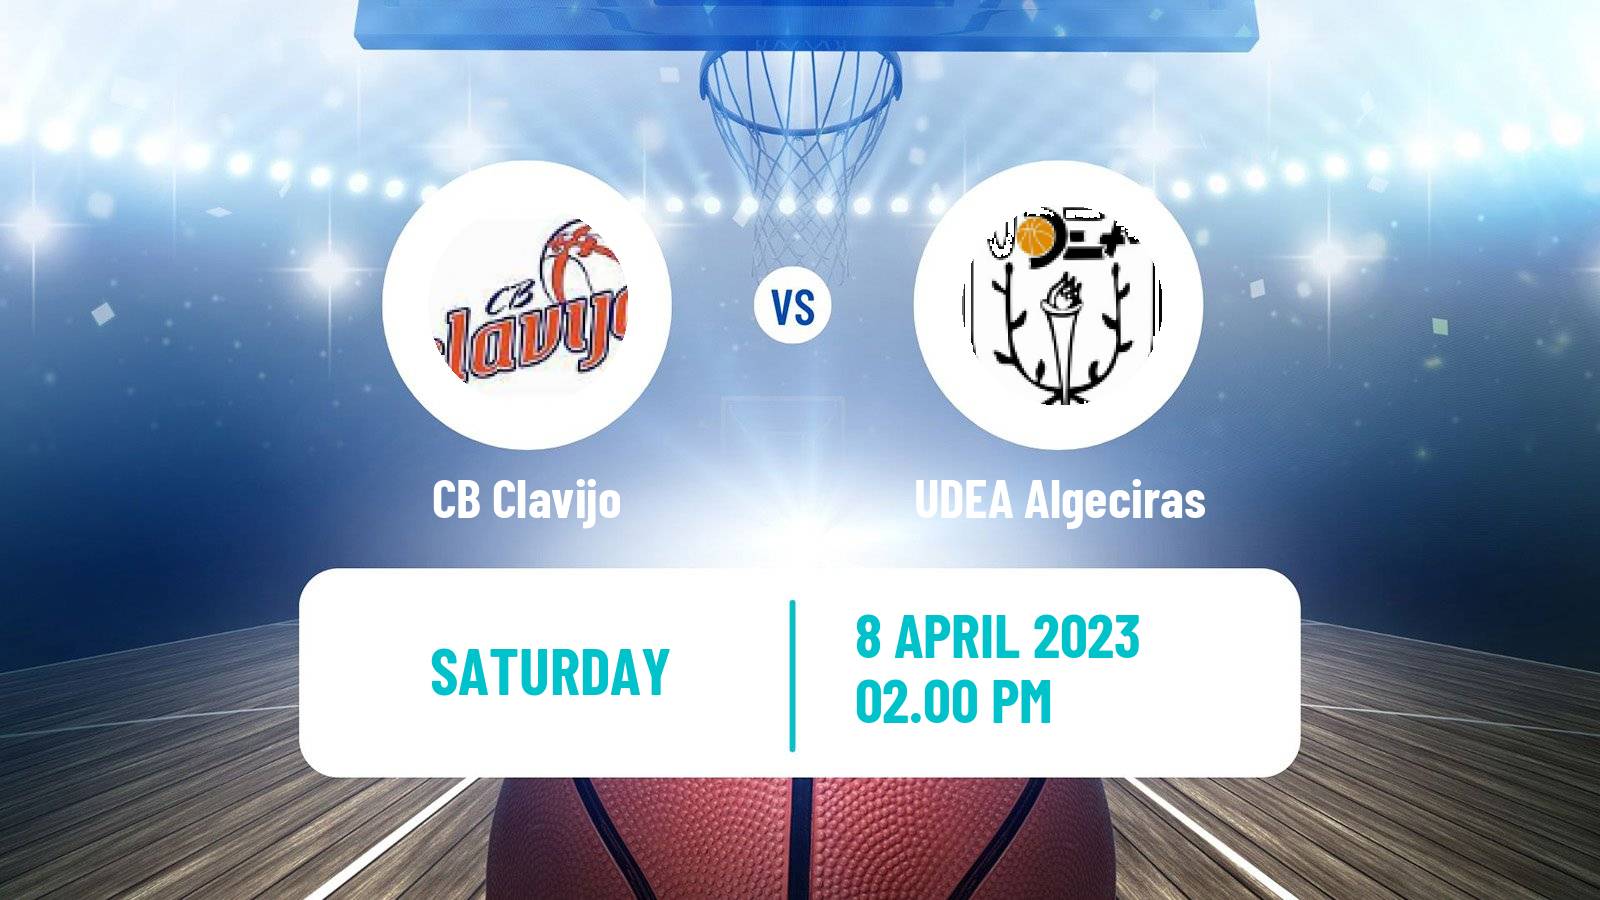 Basketball Spanish LEB Plata Clavijo - UDEA Algeciras